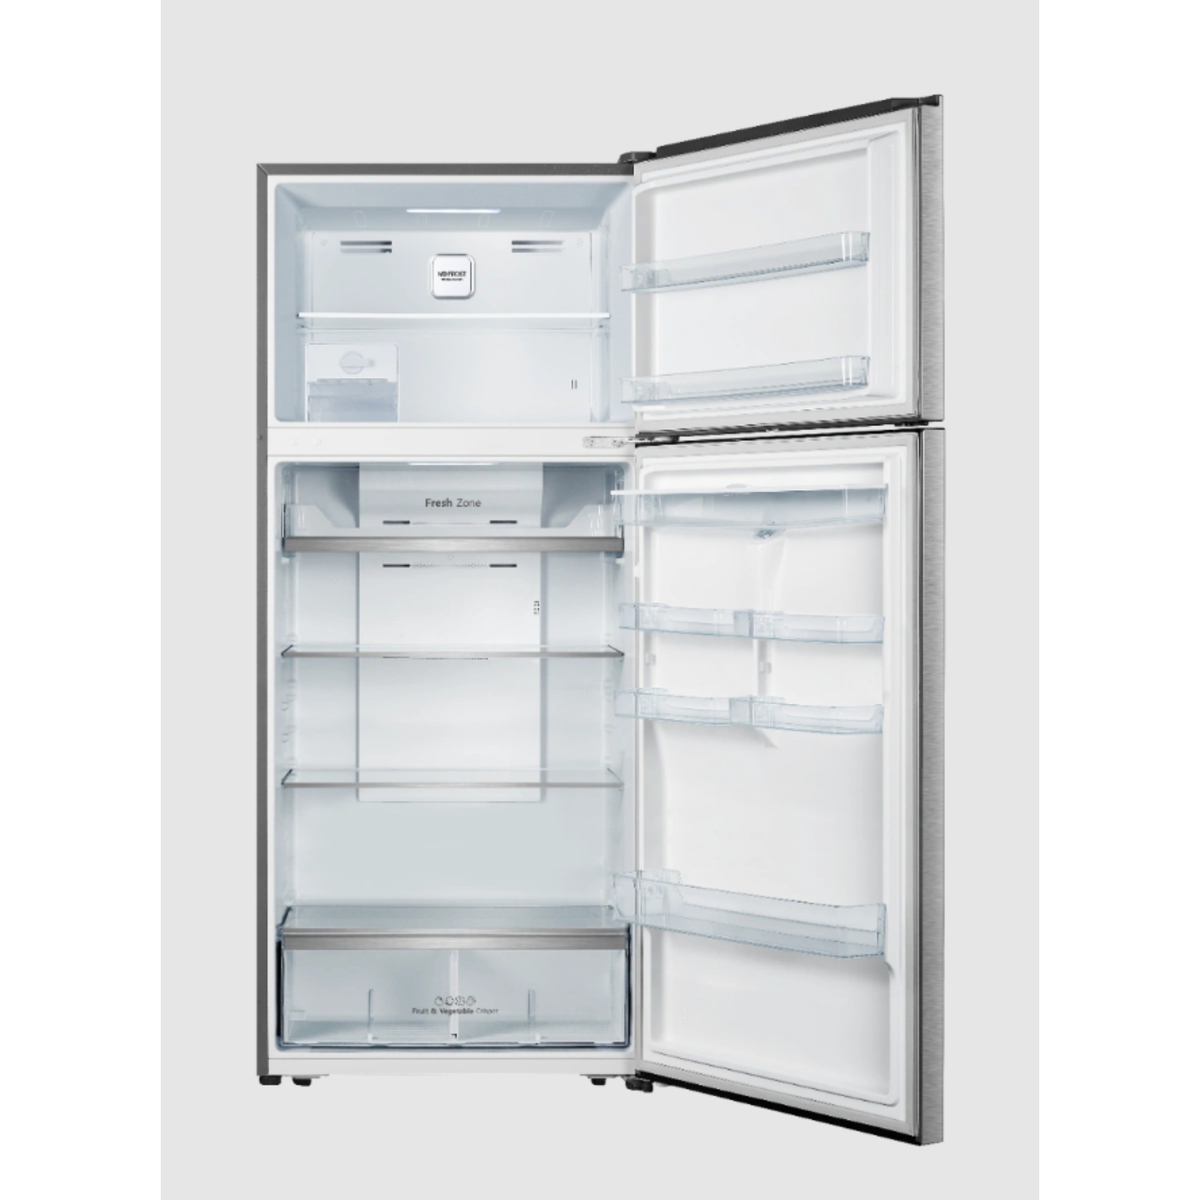 Hisense Double Door Refrigerator, 548L, Stainless Steel Finish, RT729N4WSU1